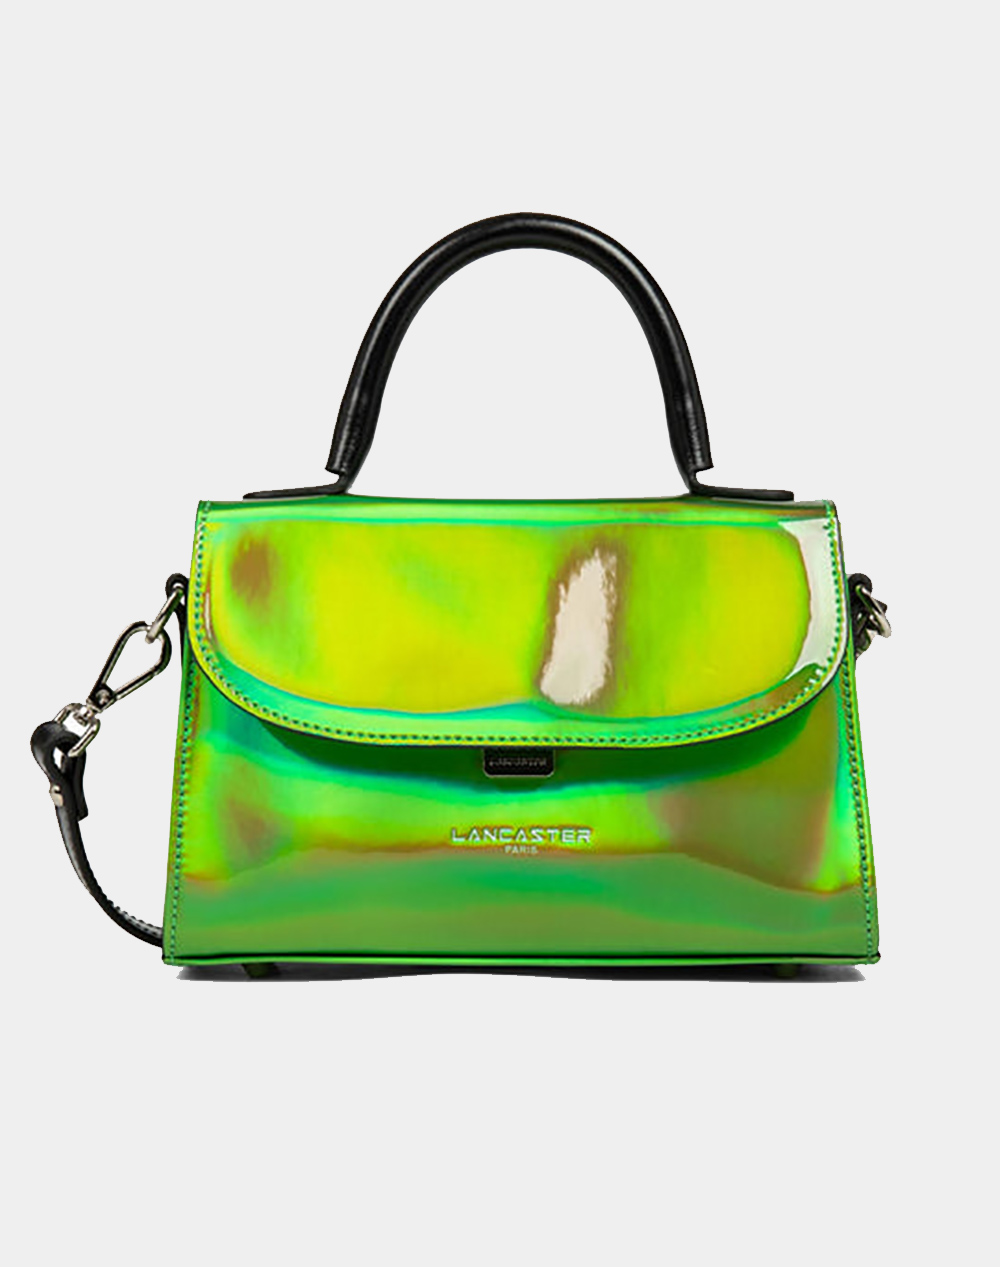 LANCASTER Τσάντα Handbag Glass Irio (Διαστάσεις: 21 x 14 x 7 εκ.) 433-41-a.1216 Green 3810PLANC6200151_XR19045